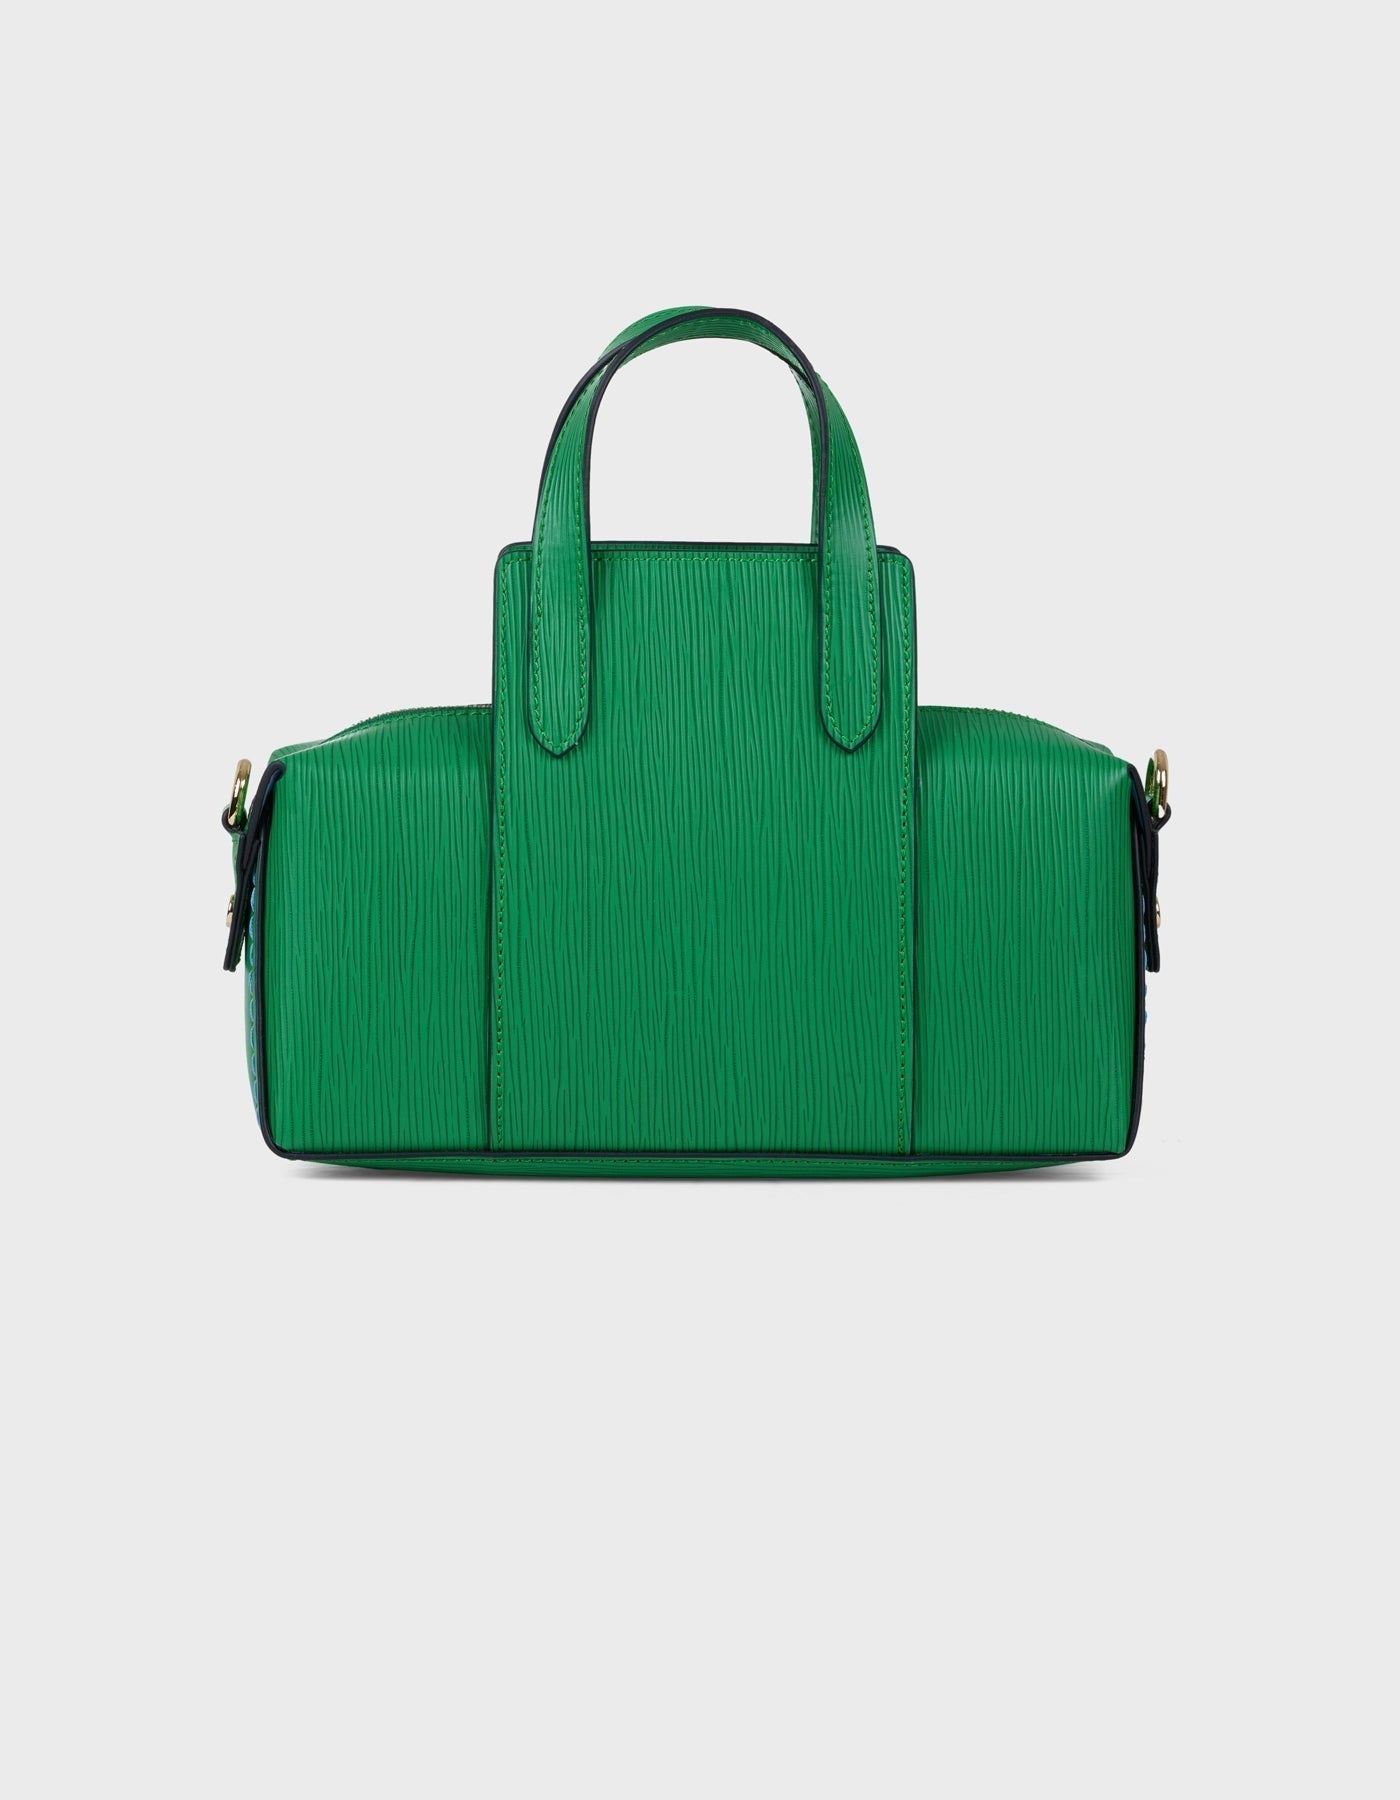 Hiva Atelier | Onsra Cylinder Shoulder Bag Emerald | Beautiful and Versatile